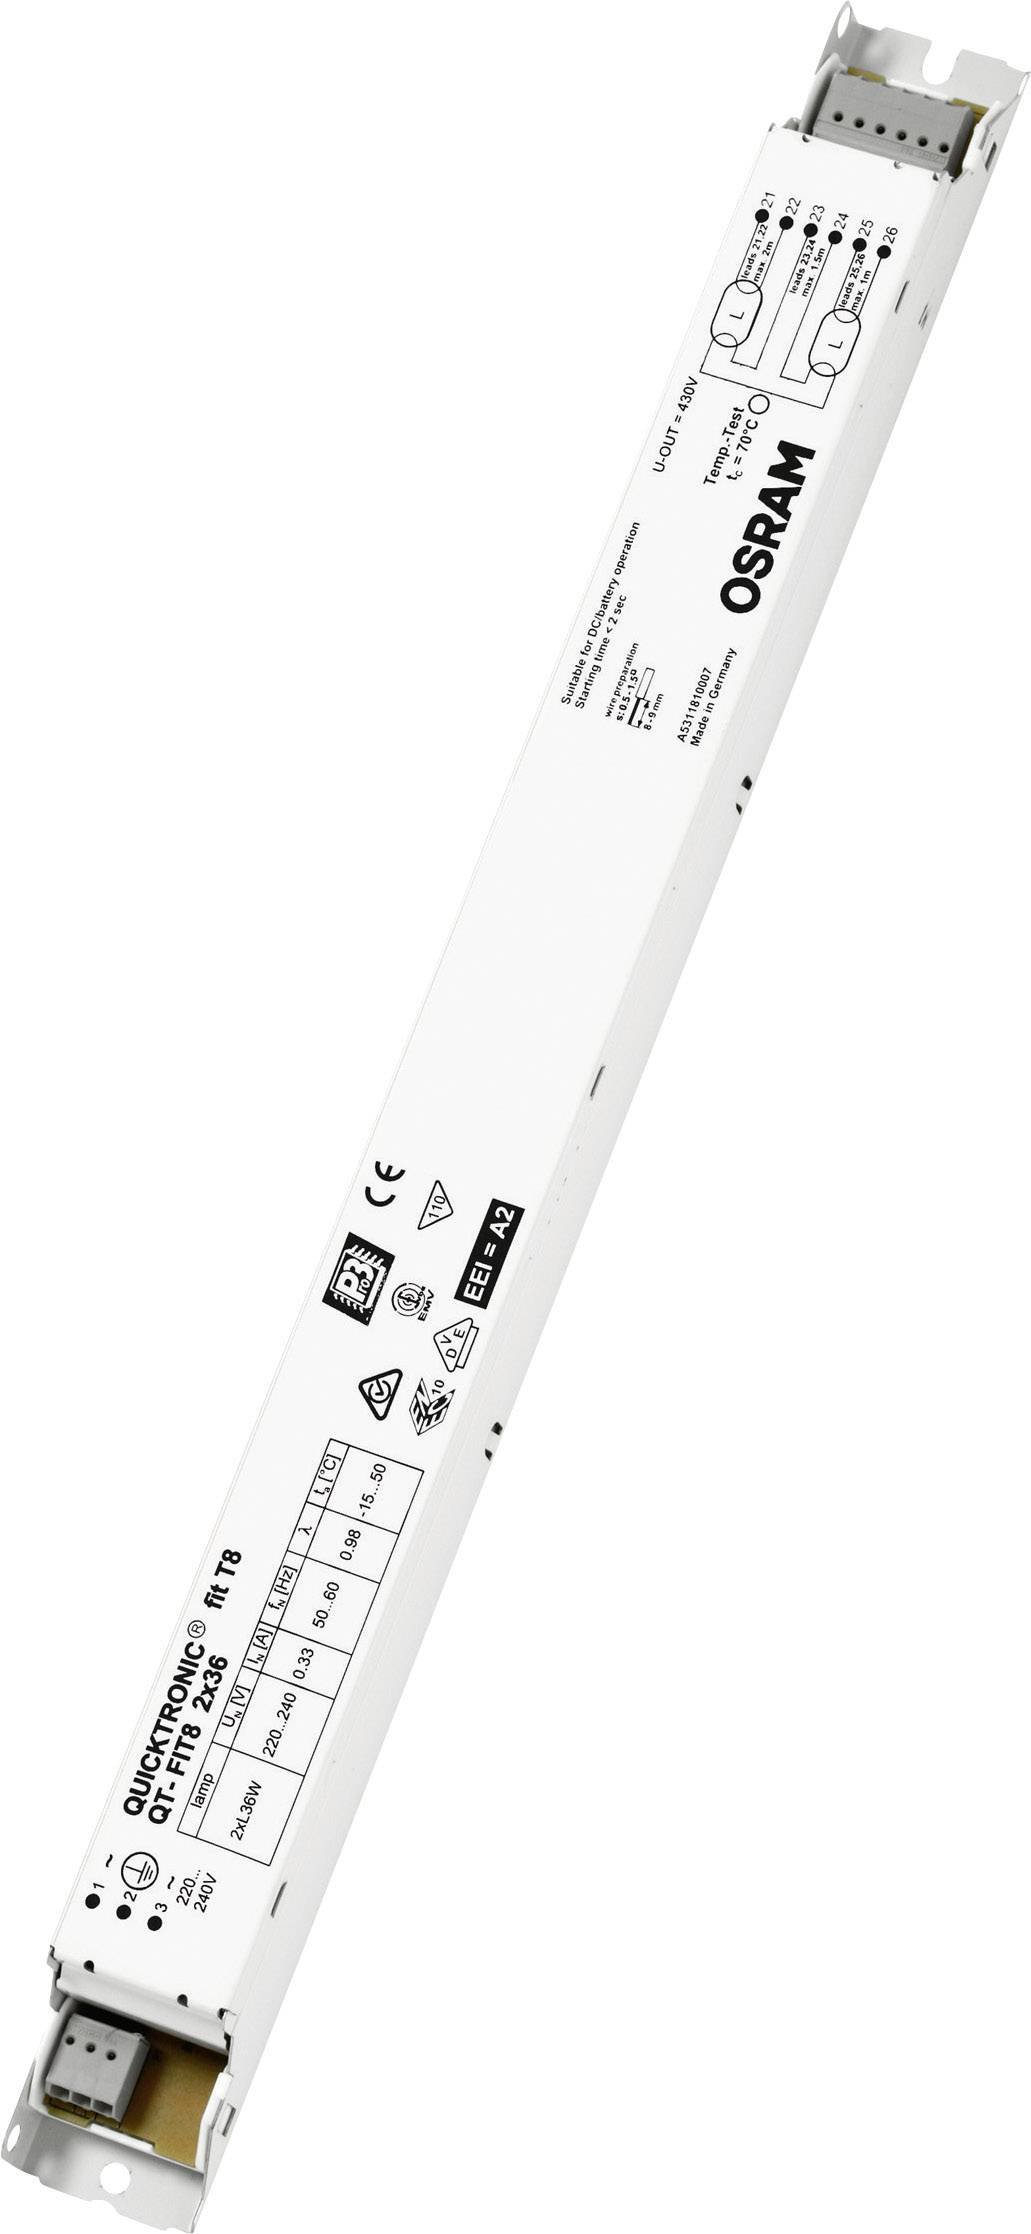 OSRAM Leuchtstofflampen, Kompaktleuchtstofflampe EVG 36 W (2 x 18 W)